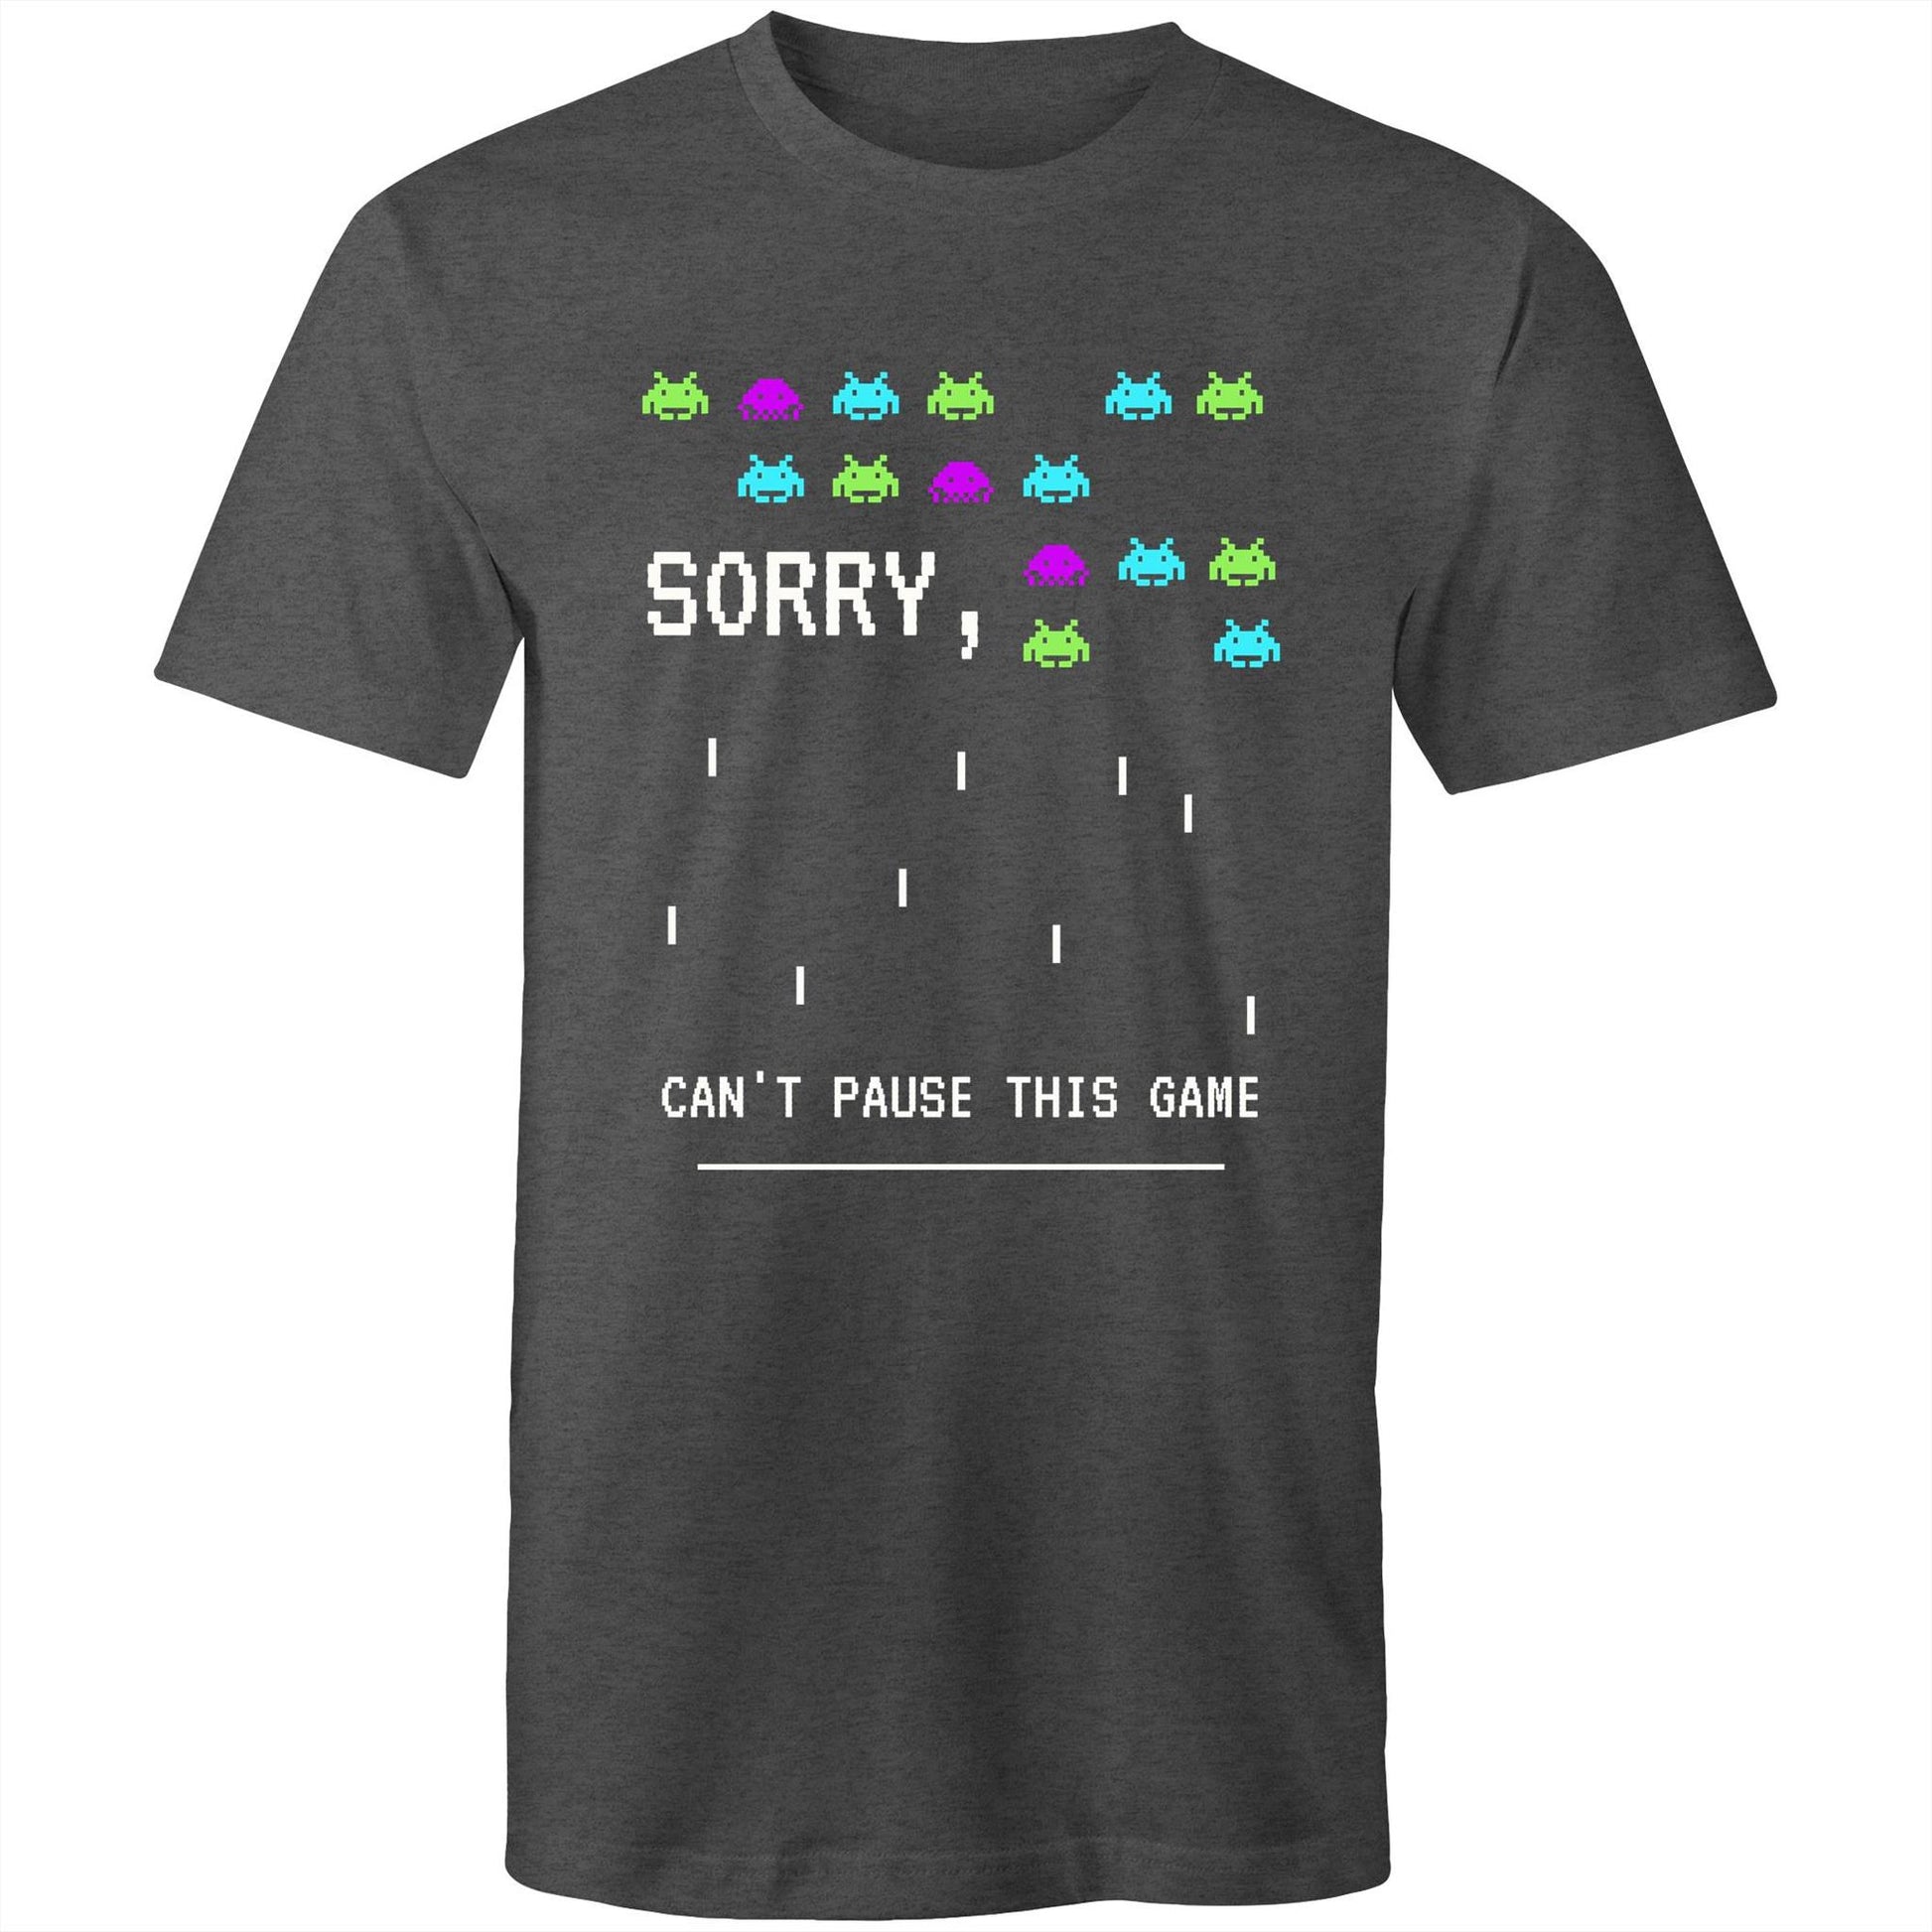 Sorry, Can't Pause This Game - Mens T-Shirt Asphalt Marle Mens T-shirt Games